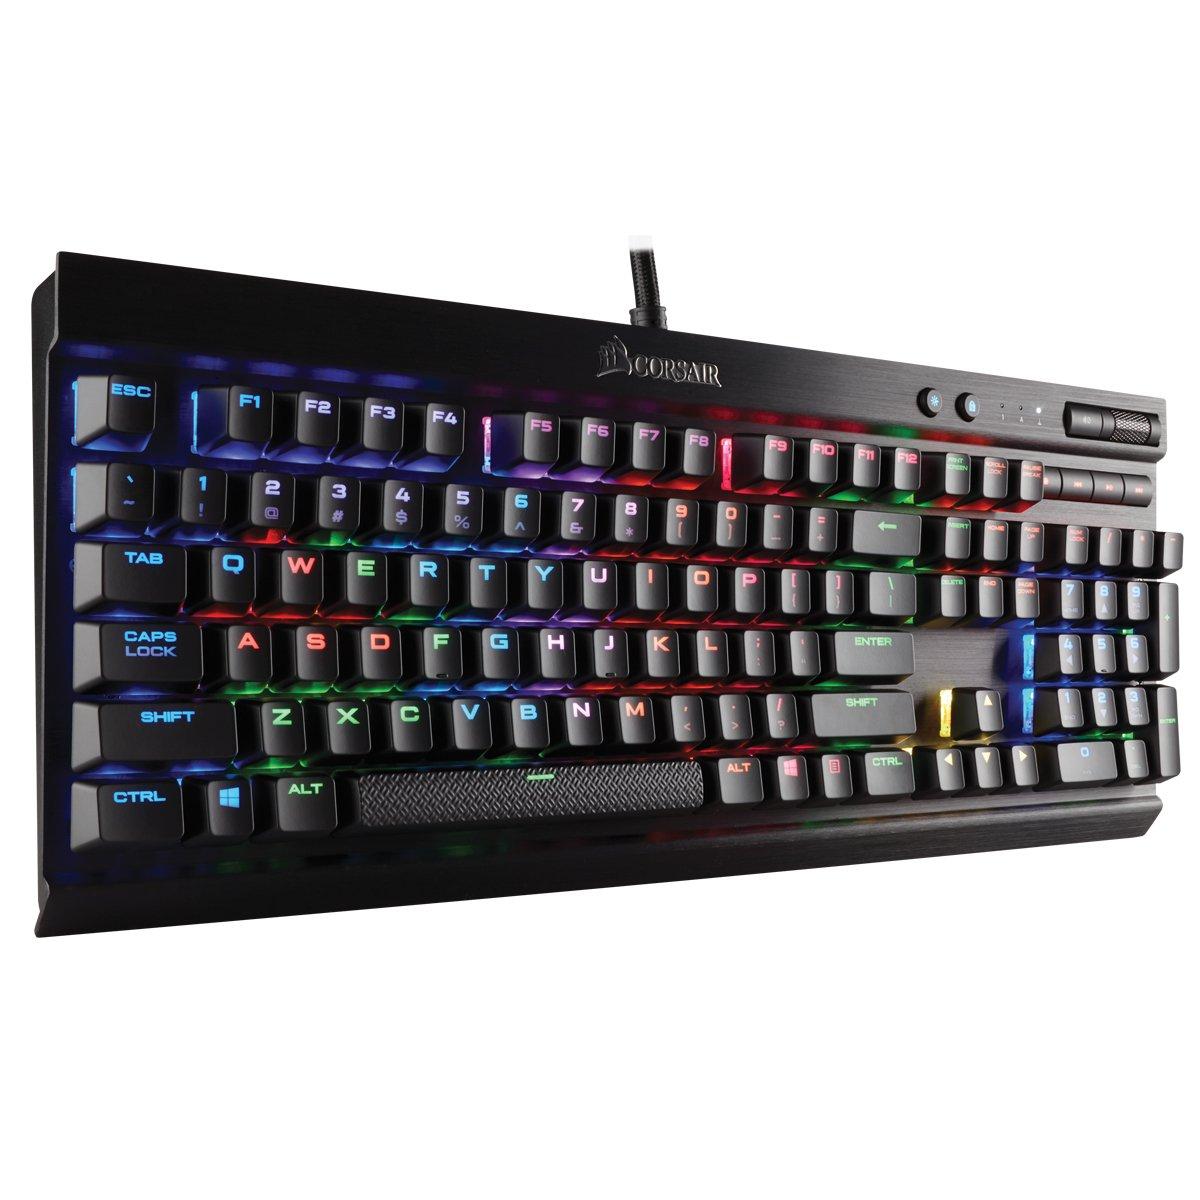 CORSAIR K70 RGB MK.2 Cherry MX Brown Switches Mechanical Gaming Keyboard